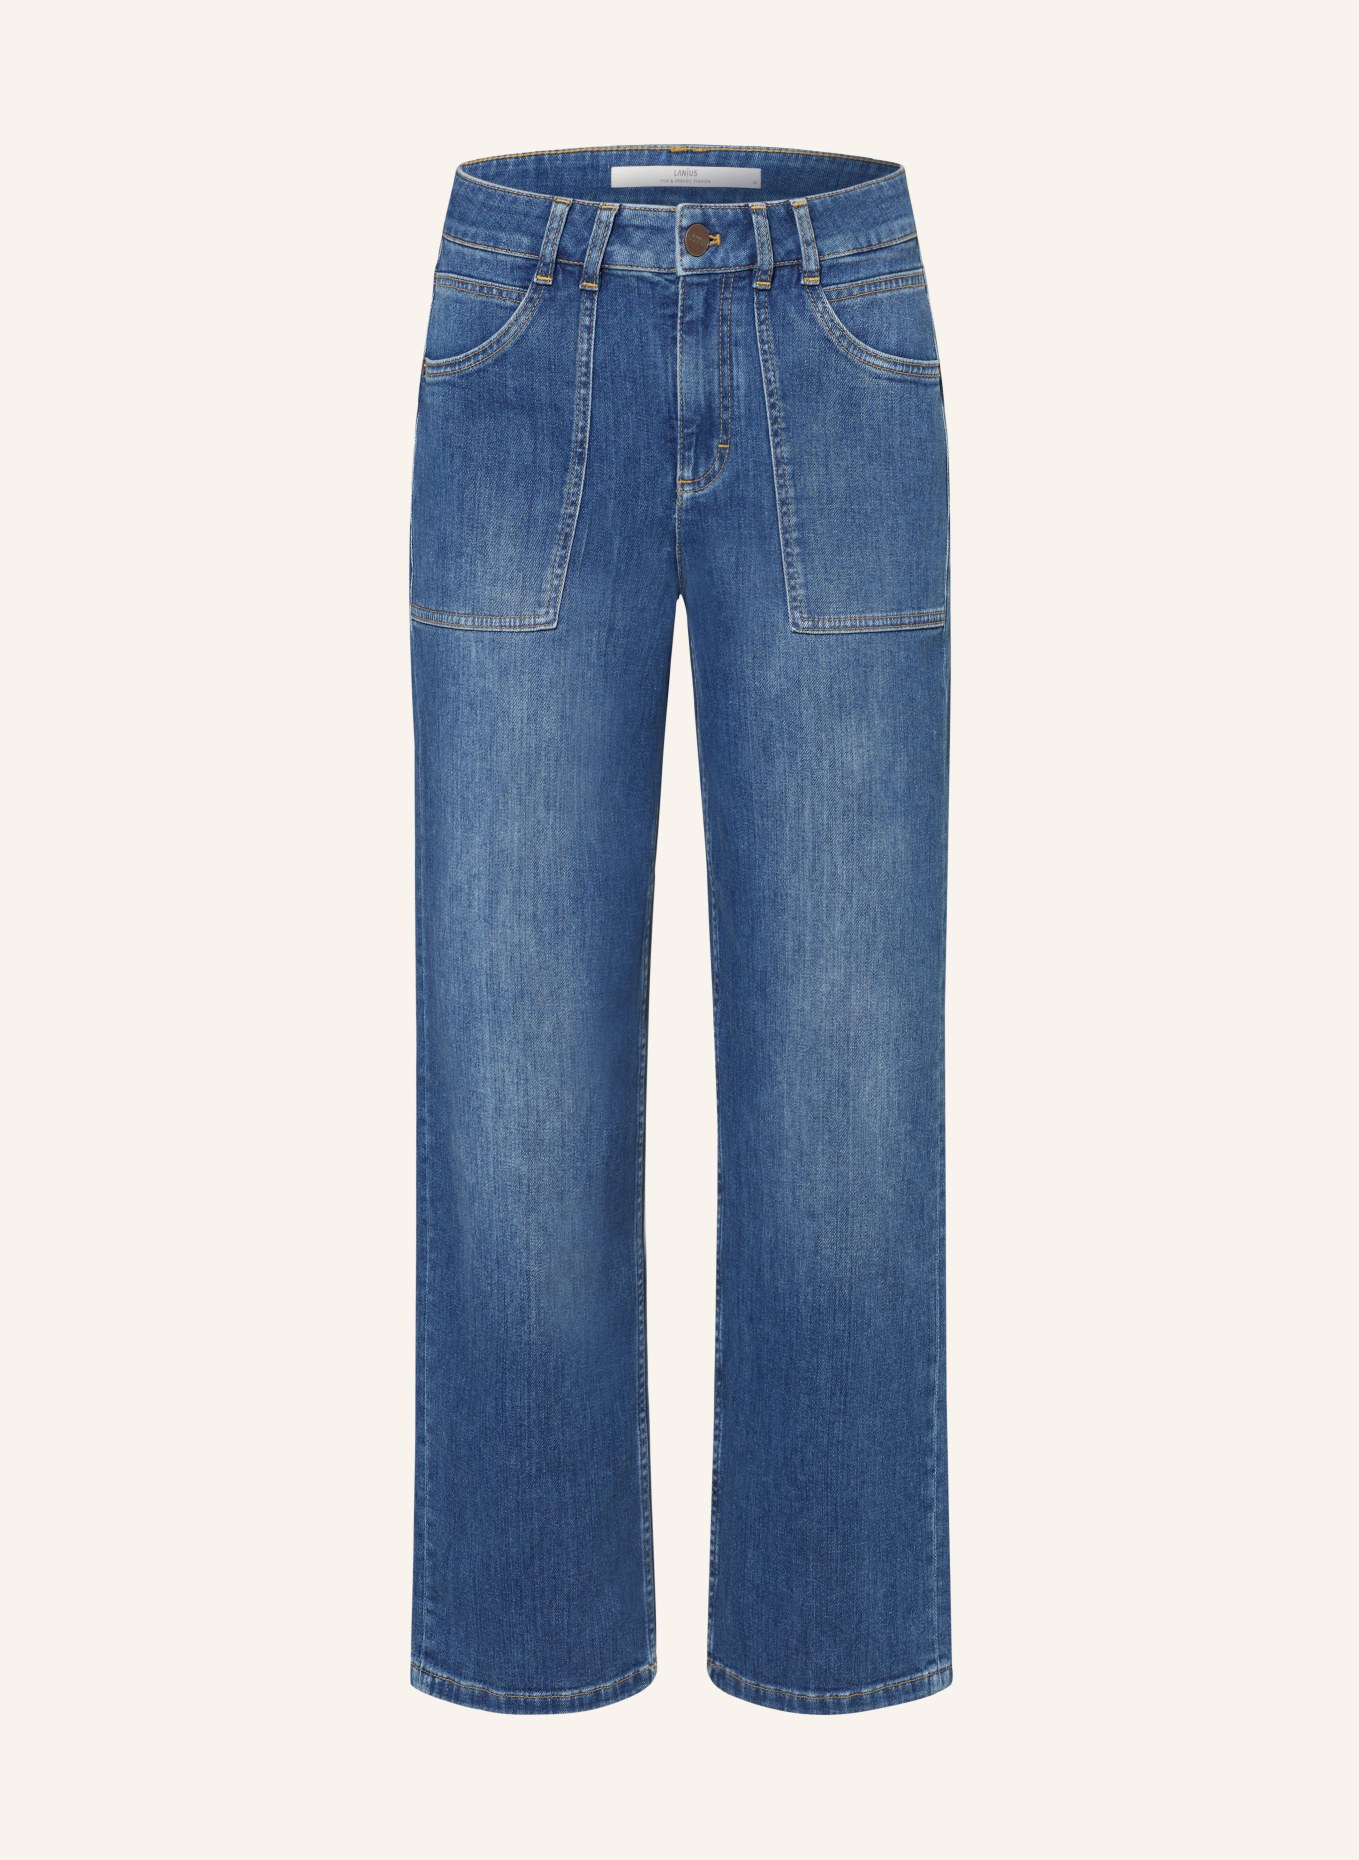 LANIUS Jeans-Culotte, Farbe: 577 mid blue denim (Bild 1)